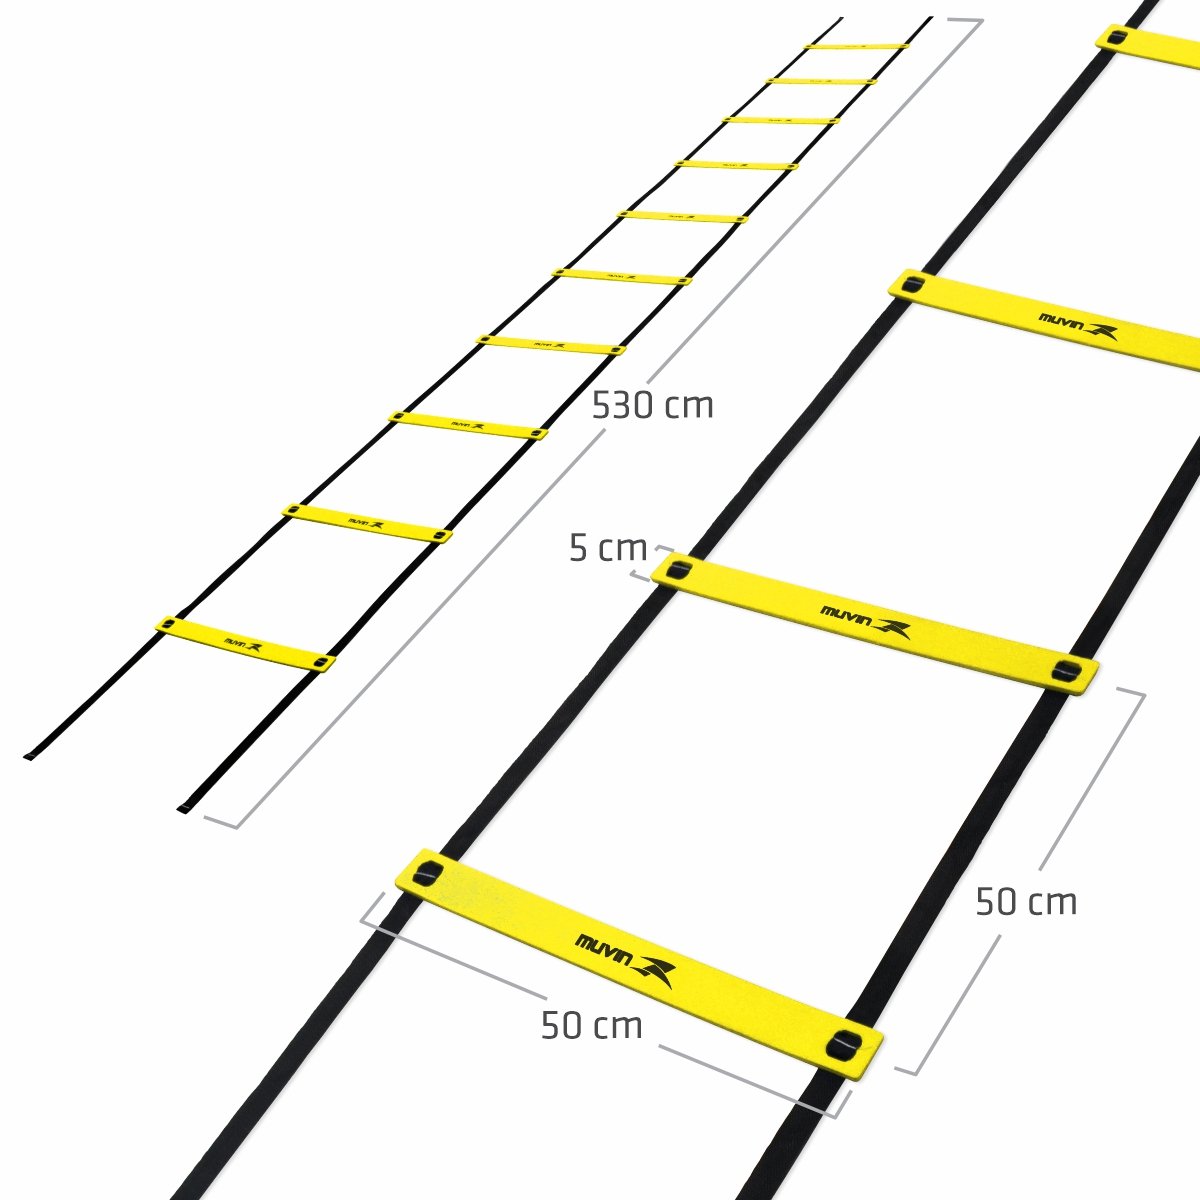 escada-de-agilidade-medidas-amarelo